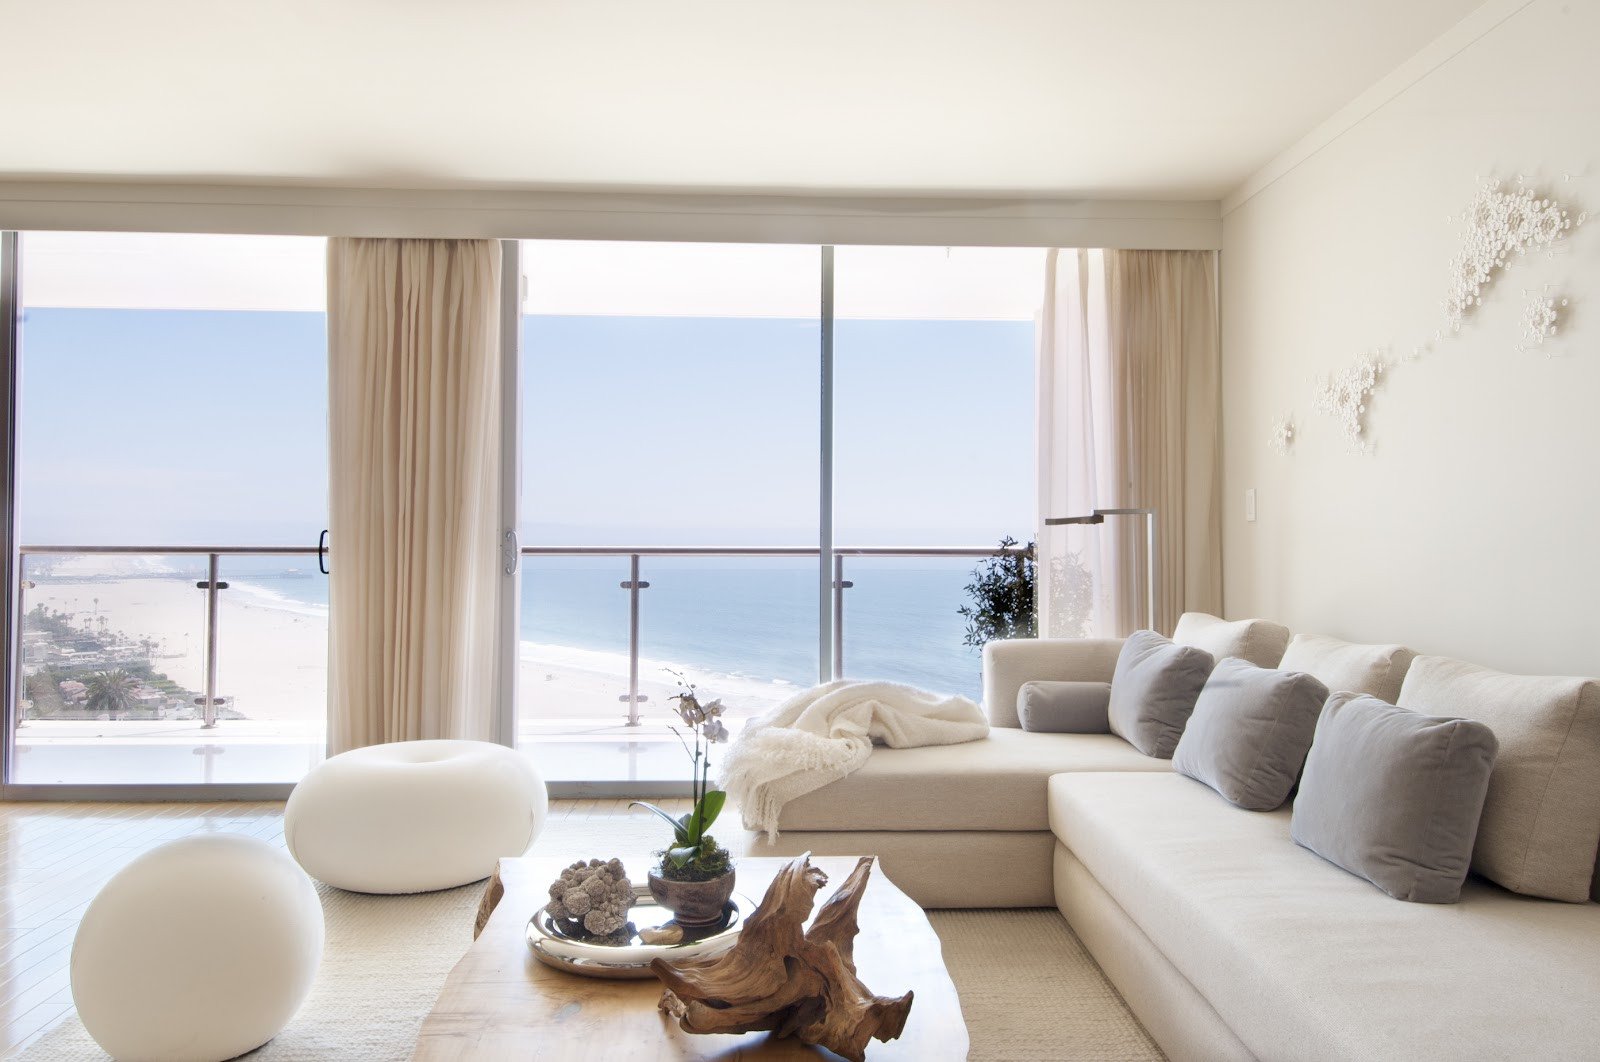 Beigh Modern Living Room Decorating Ideas Fresh Floor to Ceiling Windows for Modern Home Window Installation Amaza Design